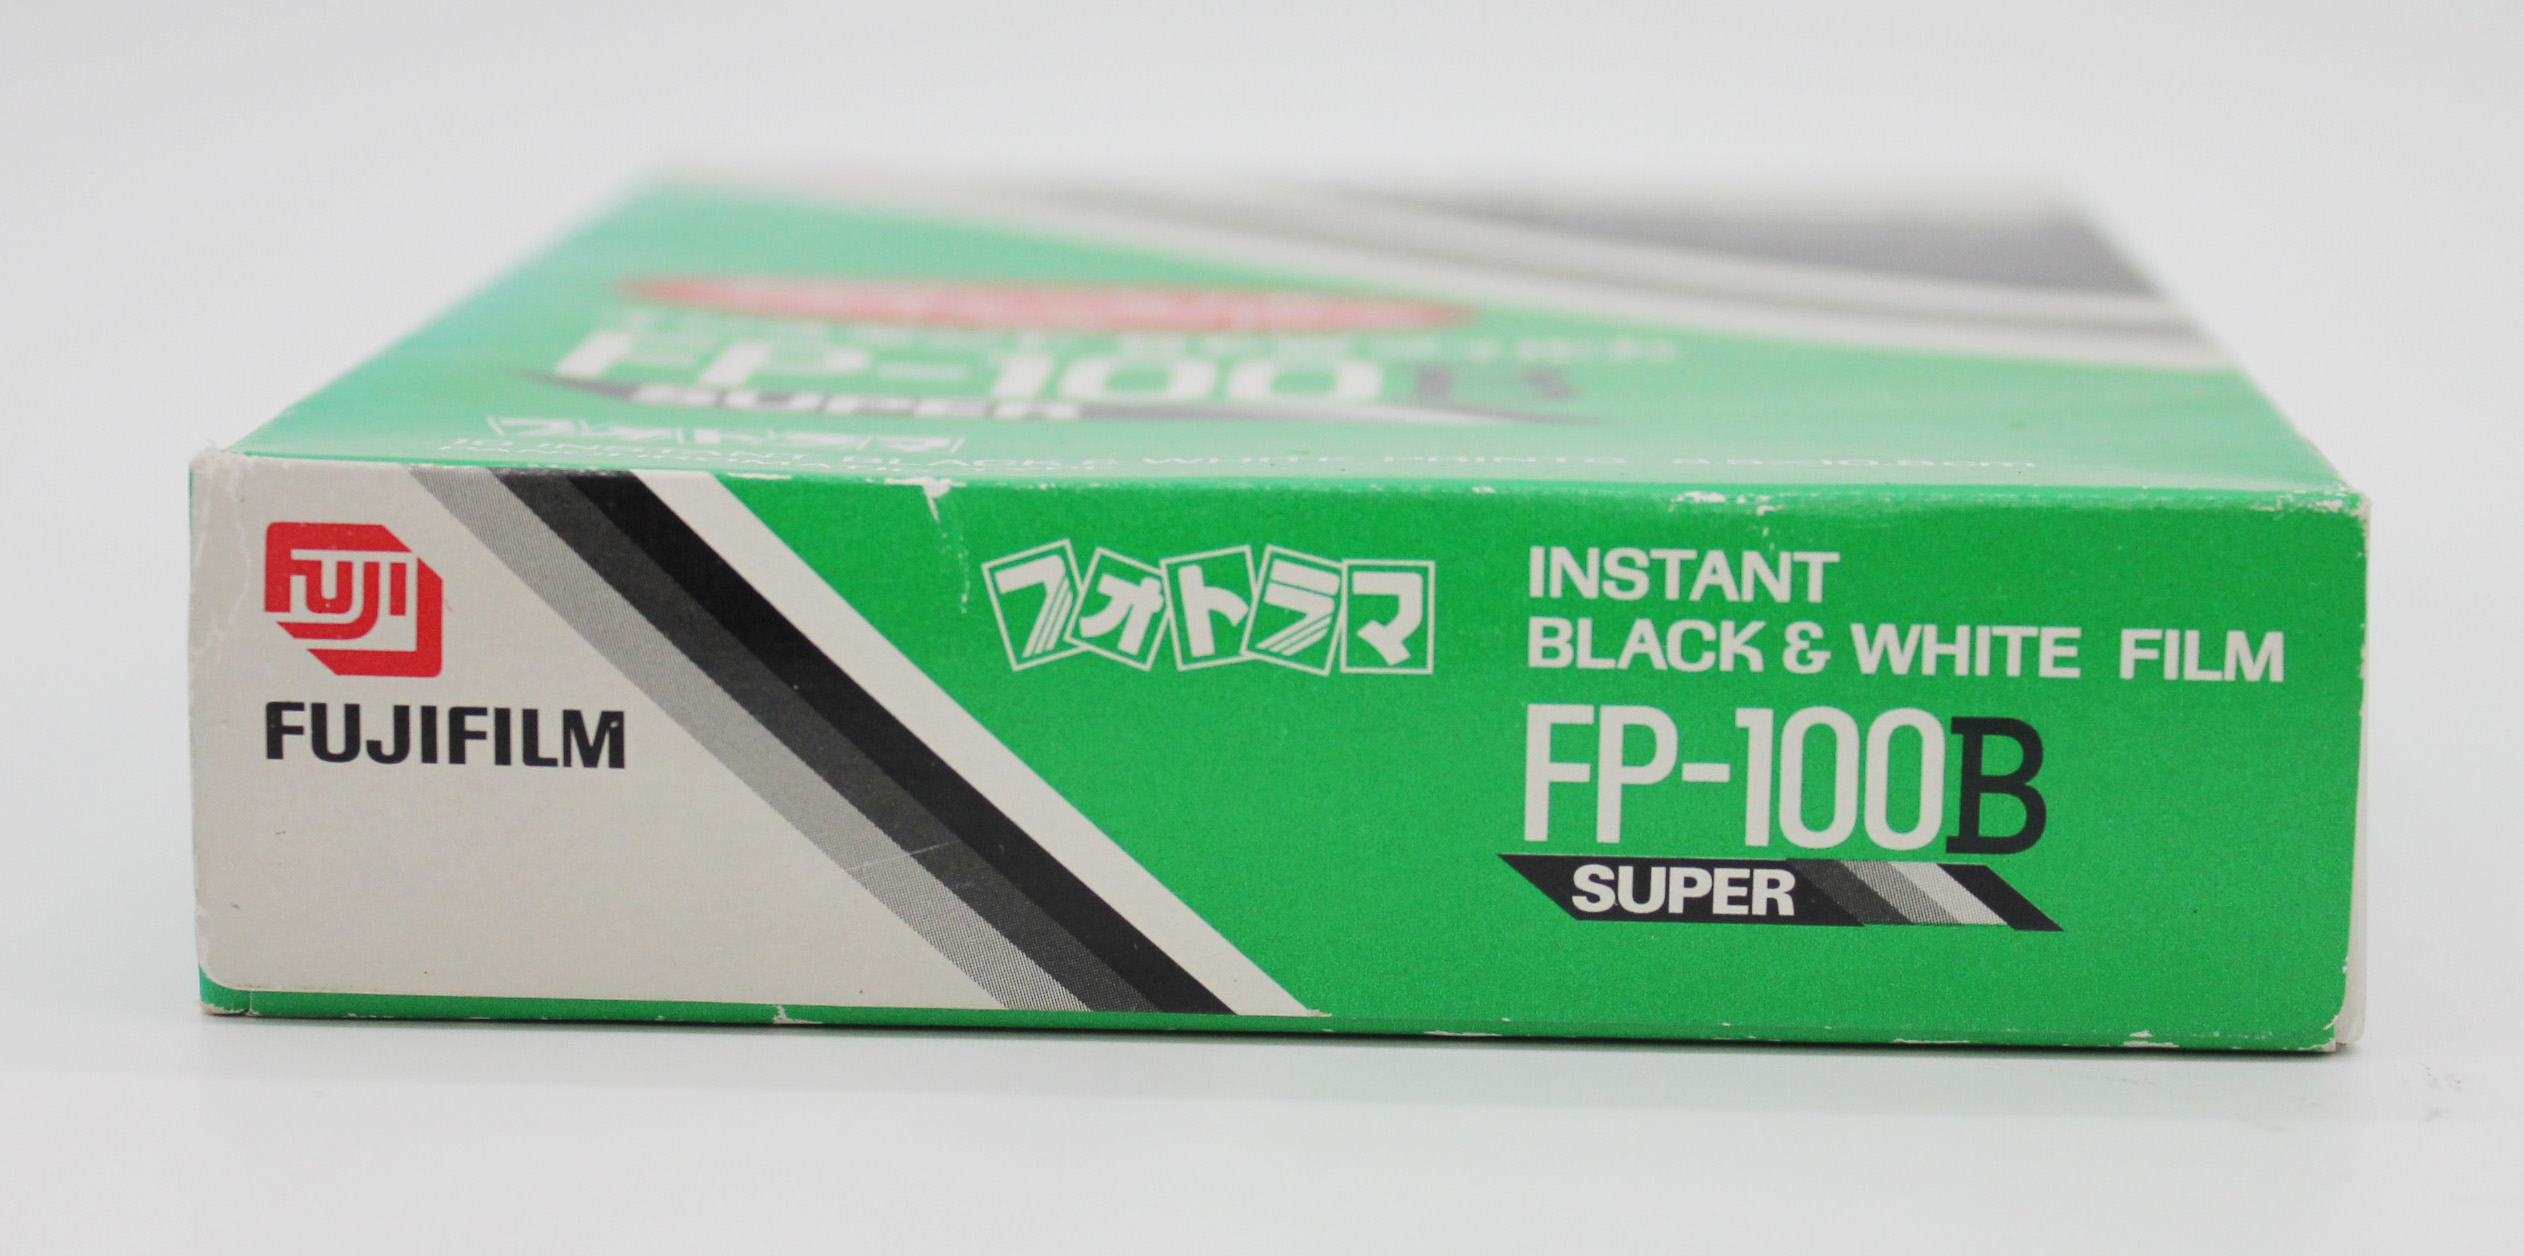  Fujifilm FP-100B Instant Black & White Film (Expired 09/2004) from Japan Photo 4